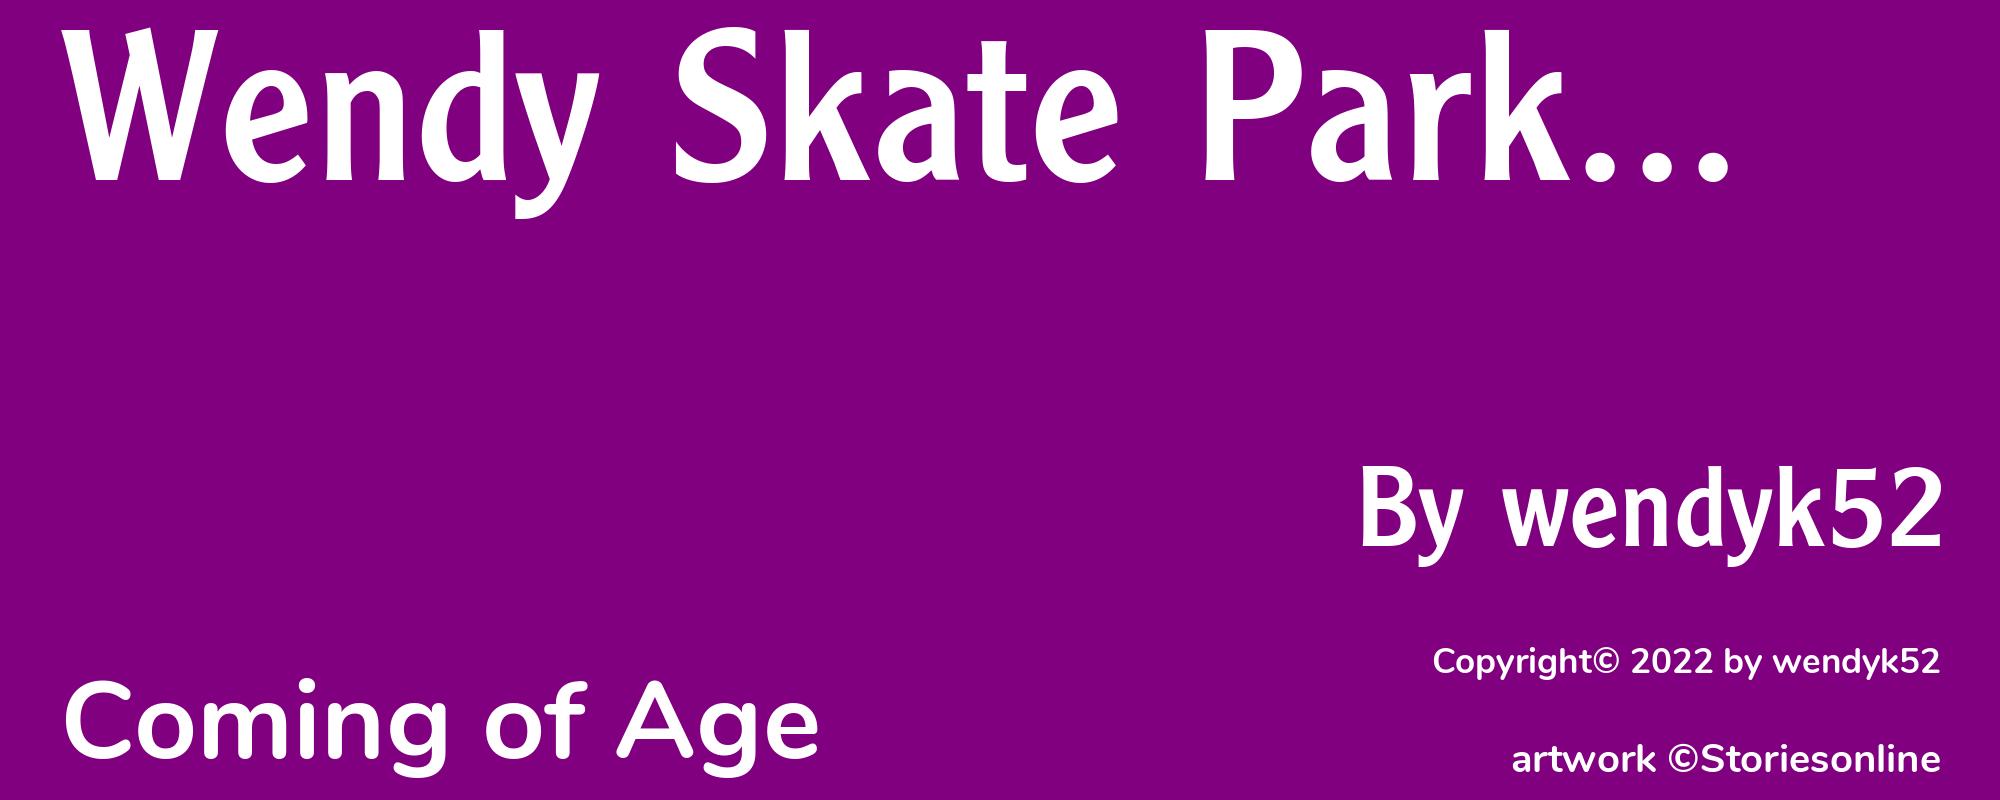 Wendy Skate Park... - Cover